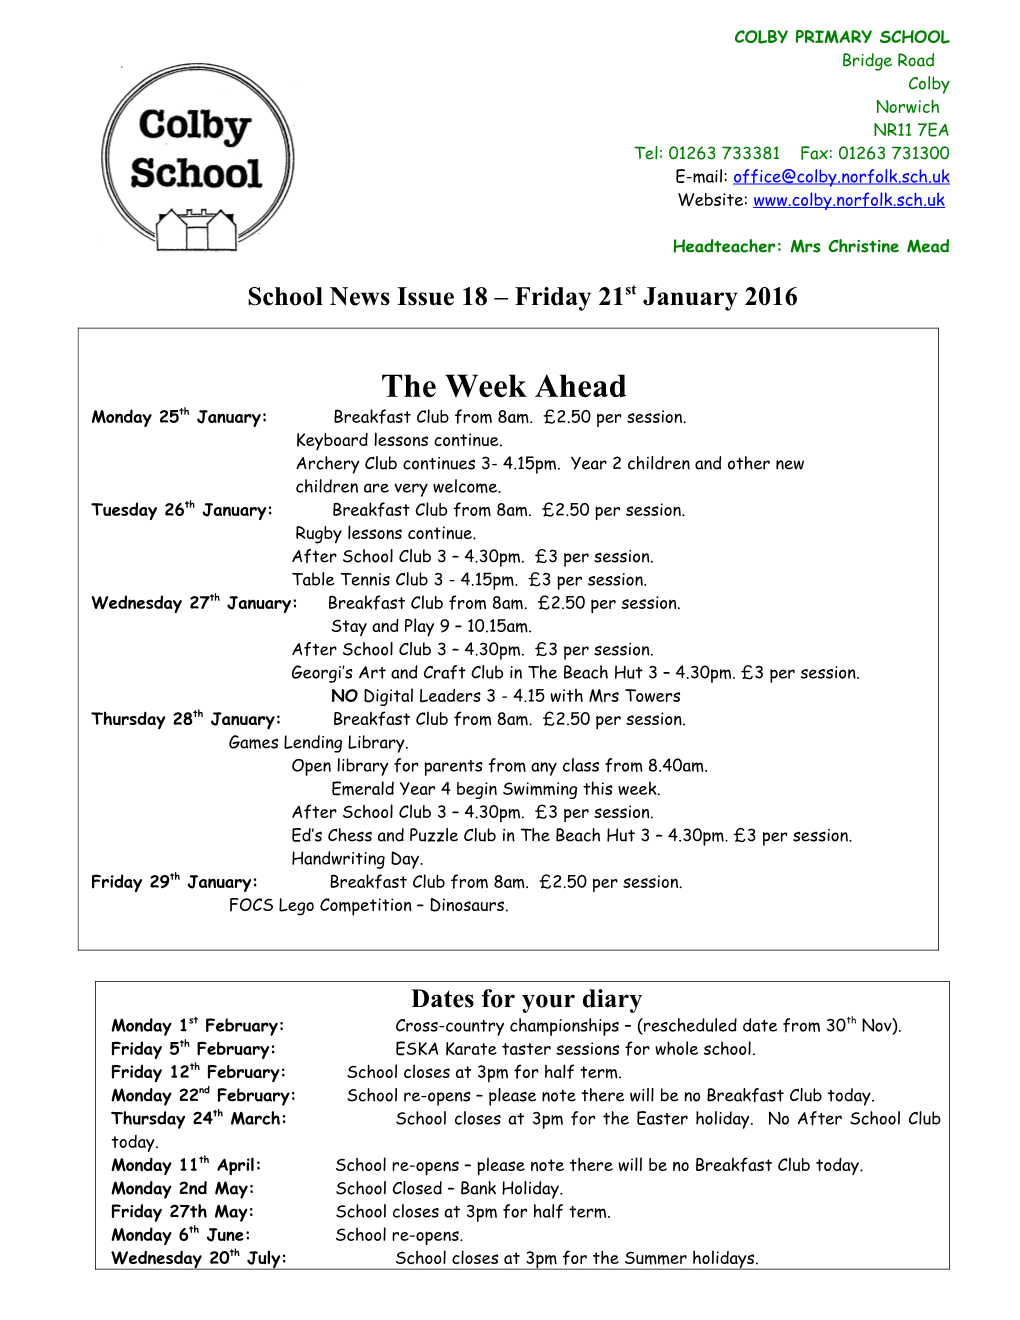 School News Issue 18 Friday 21St January 2016